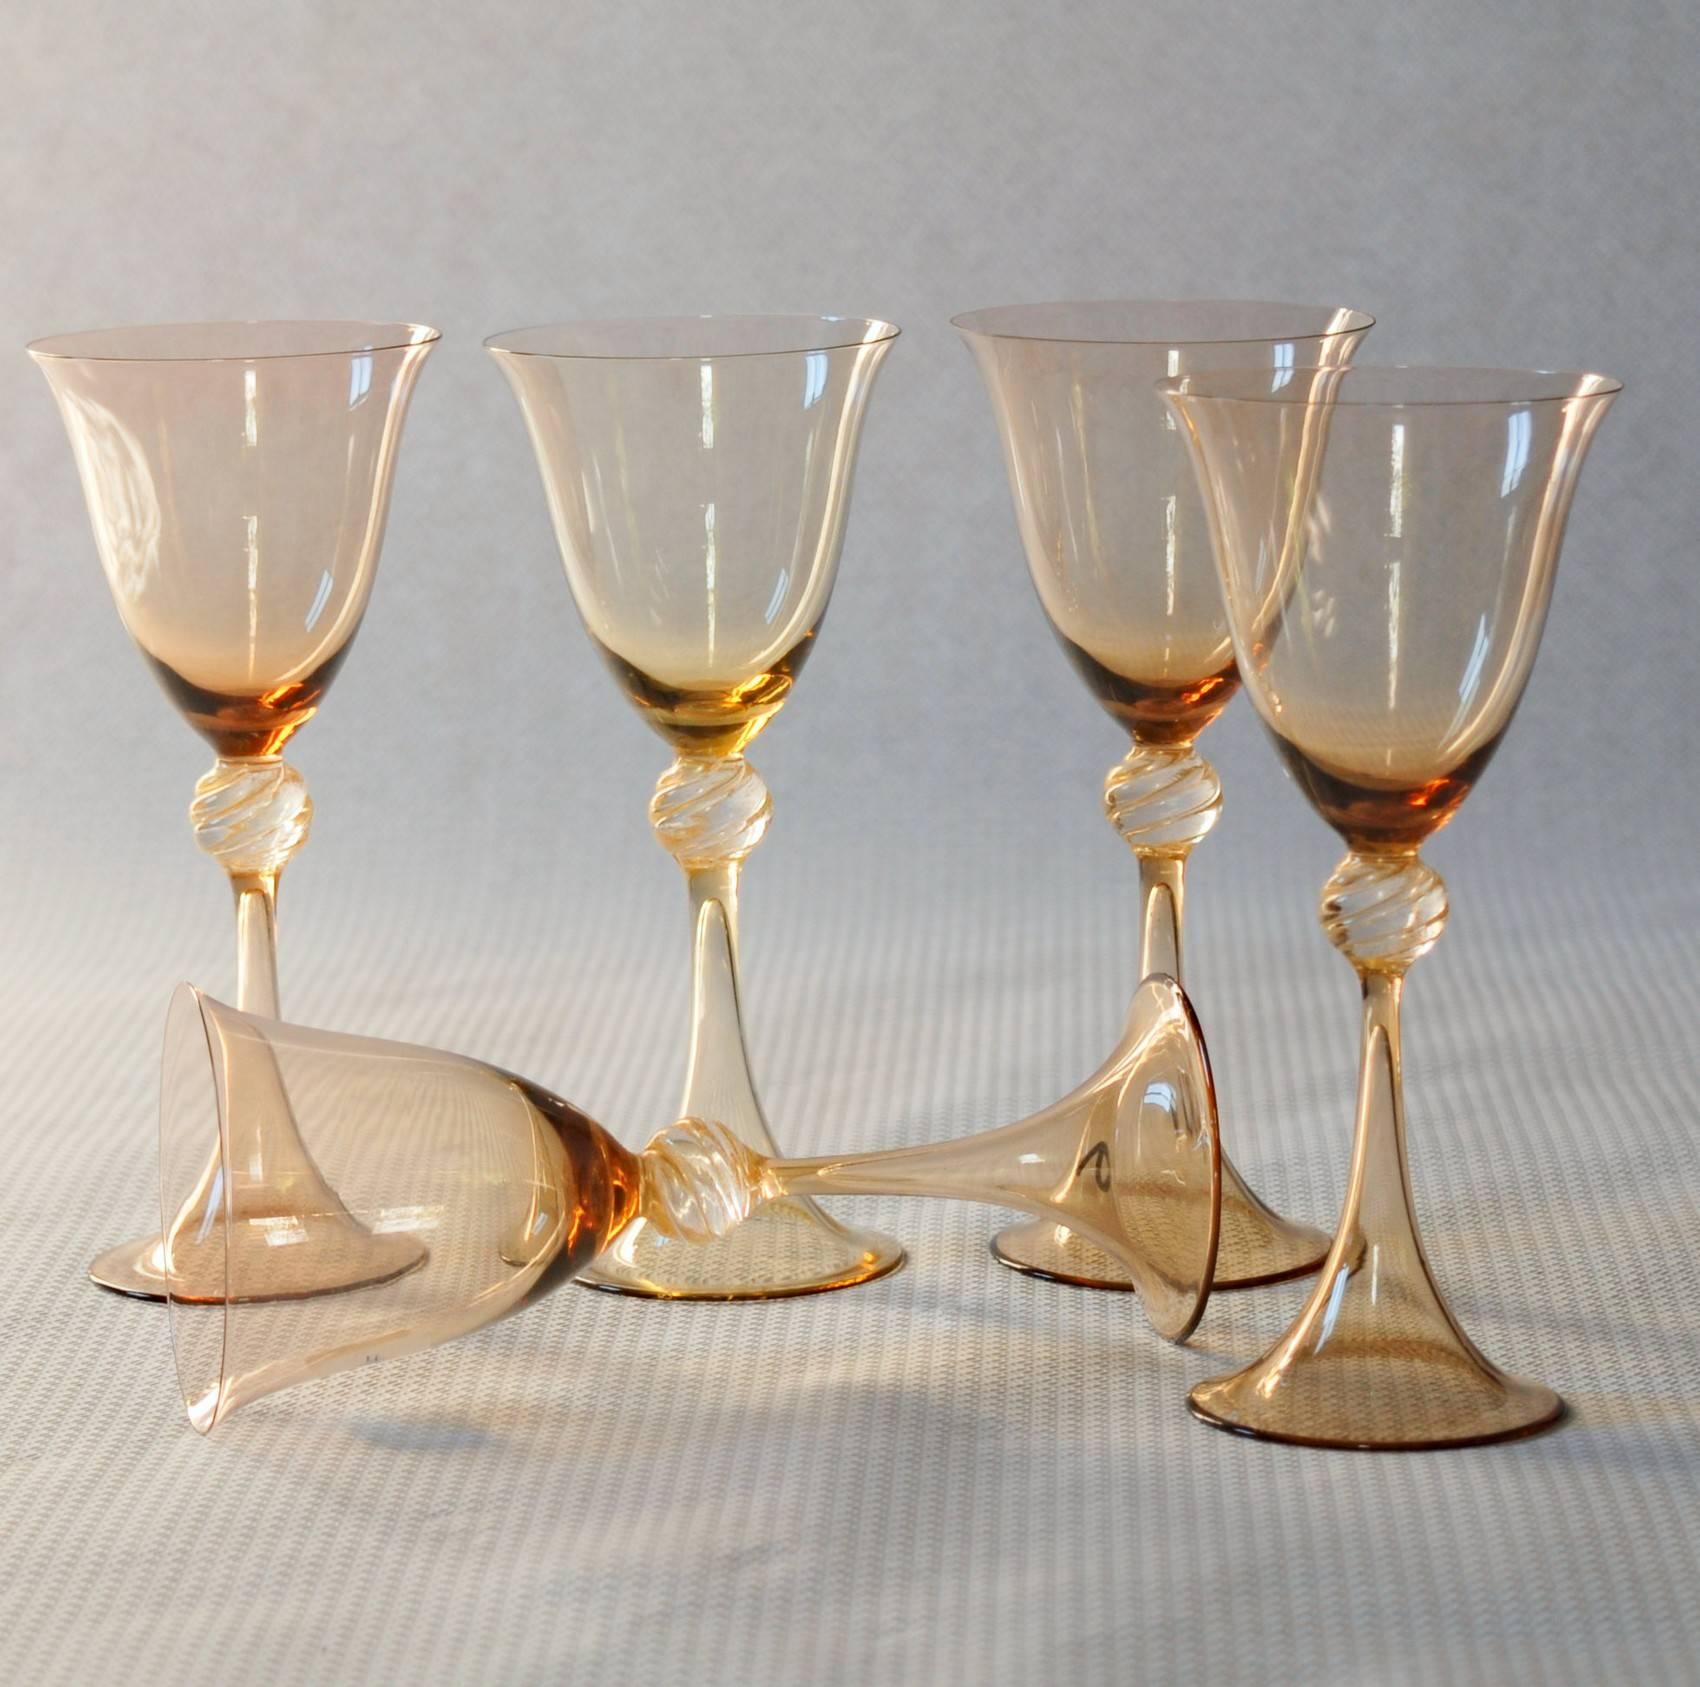 Italian Five Wine Glasses, Cenedese Fume, Gold Leaf Neck, Hand-Opened Stem, Signed 1990s